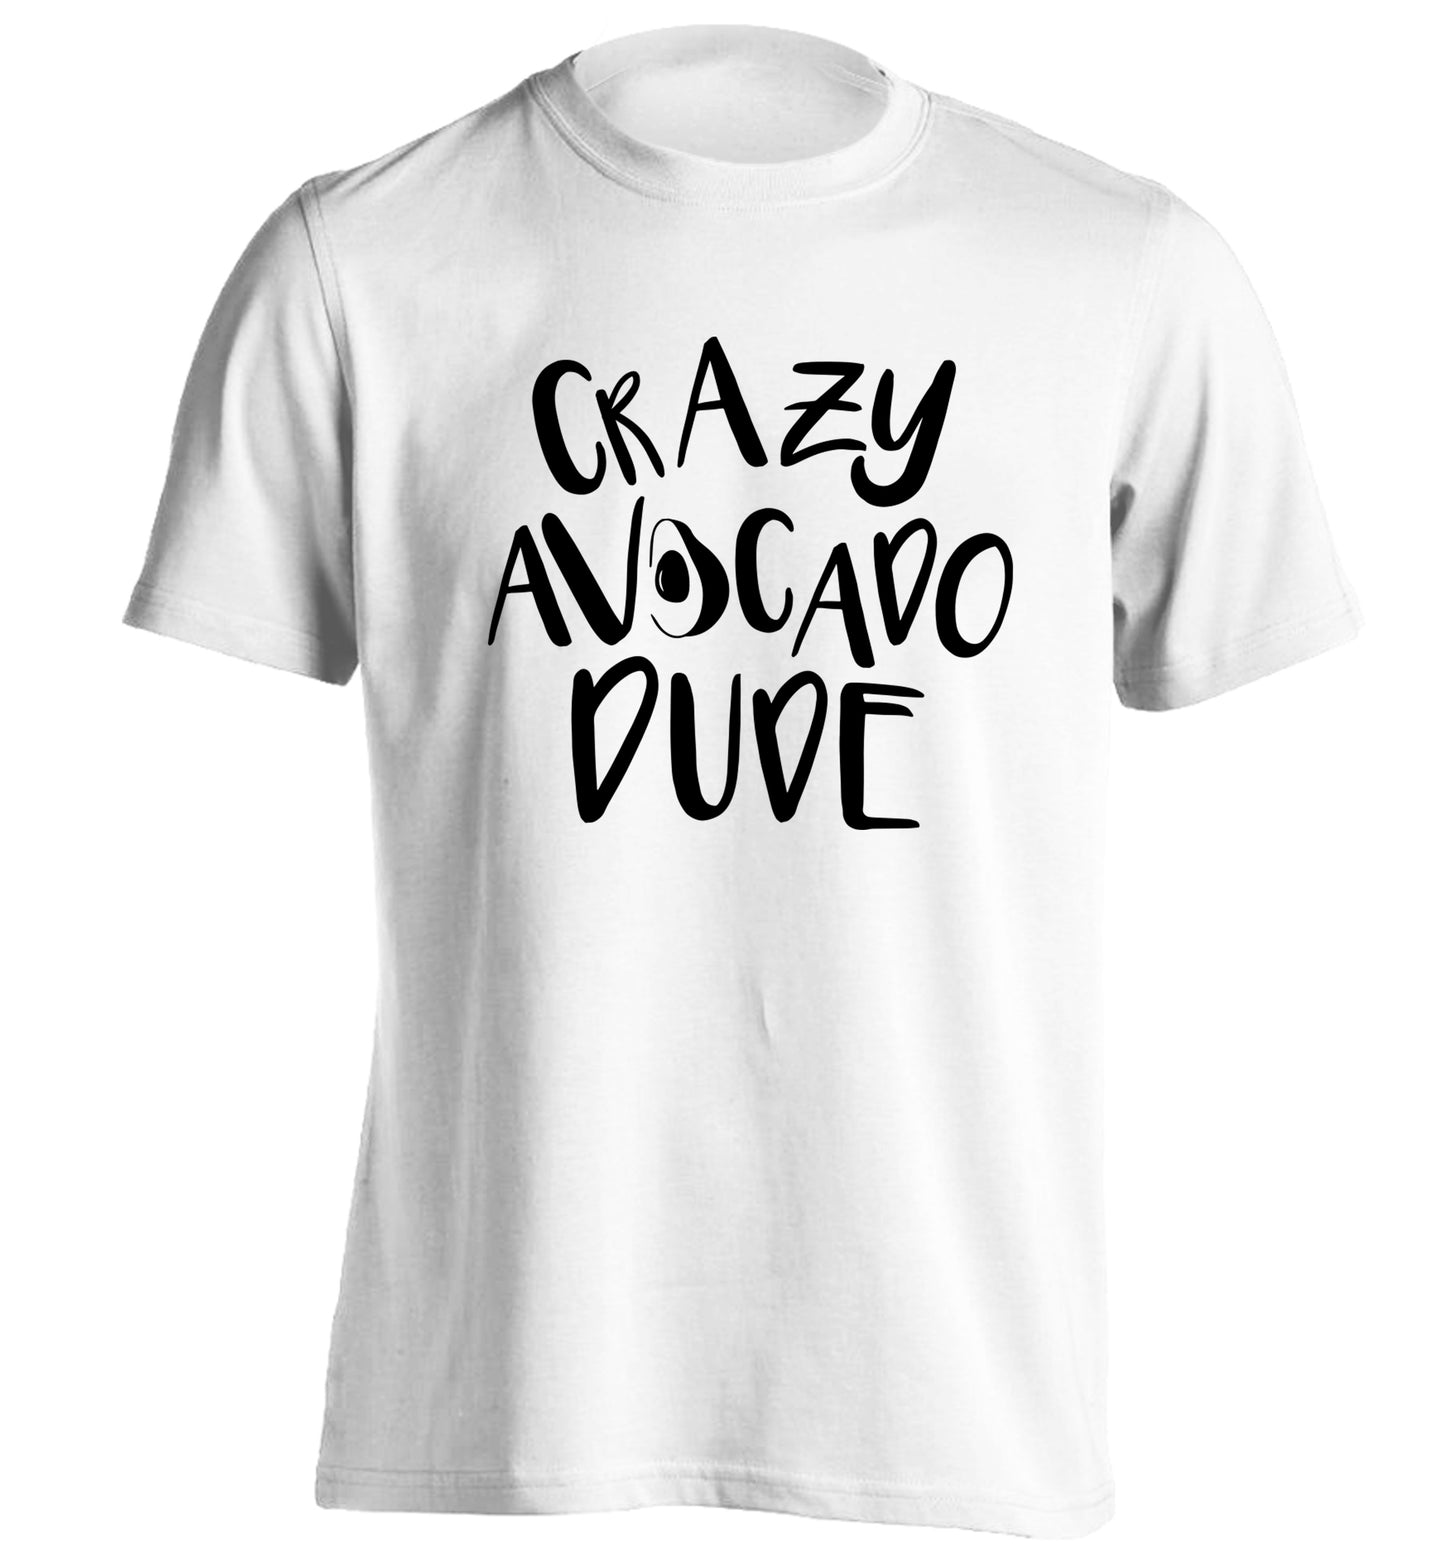 Crazy avocado dude adults unisex white Tshirt 2XL